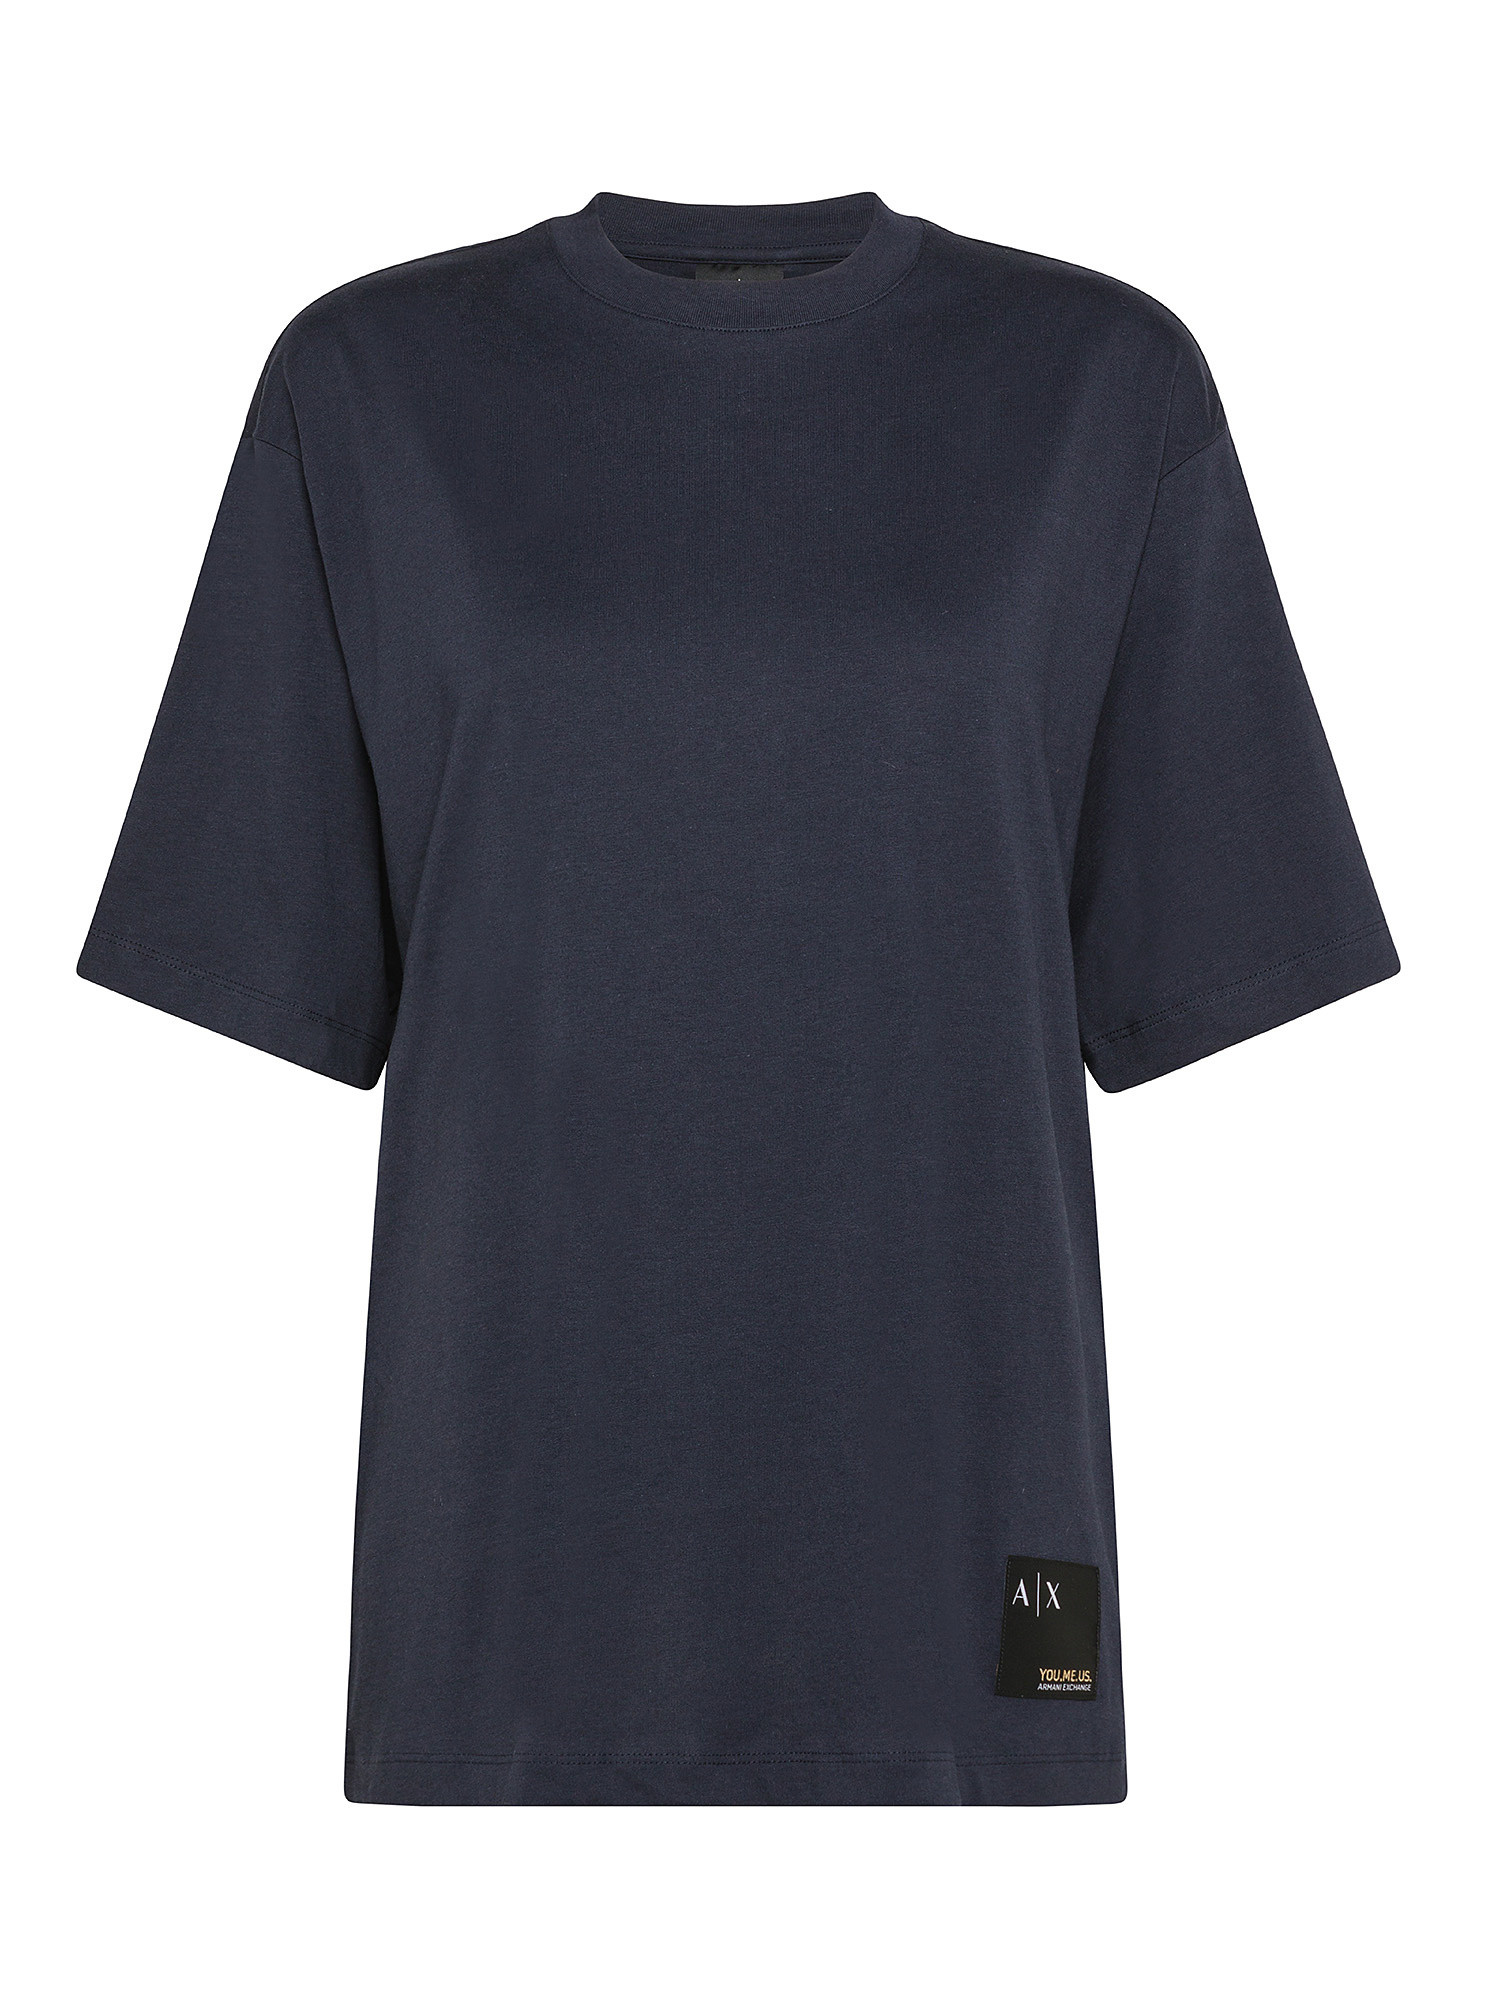 Armani Exchange - T-shirt girocollo in cotone, Blu scuro, large image number 0